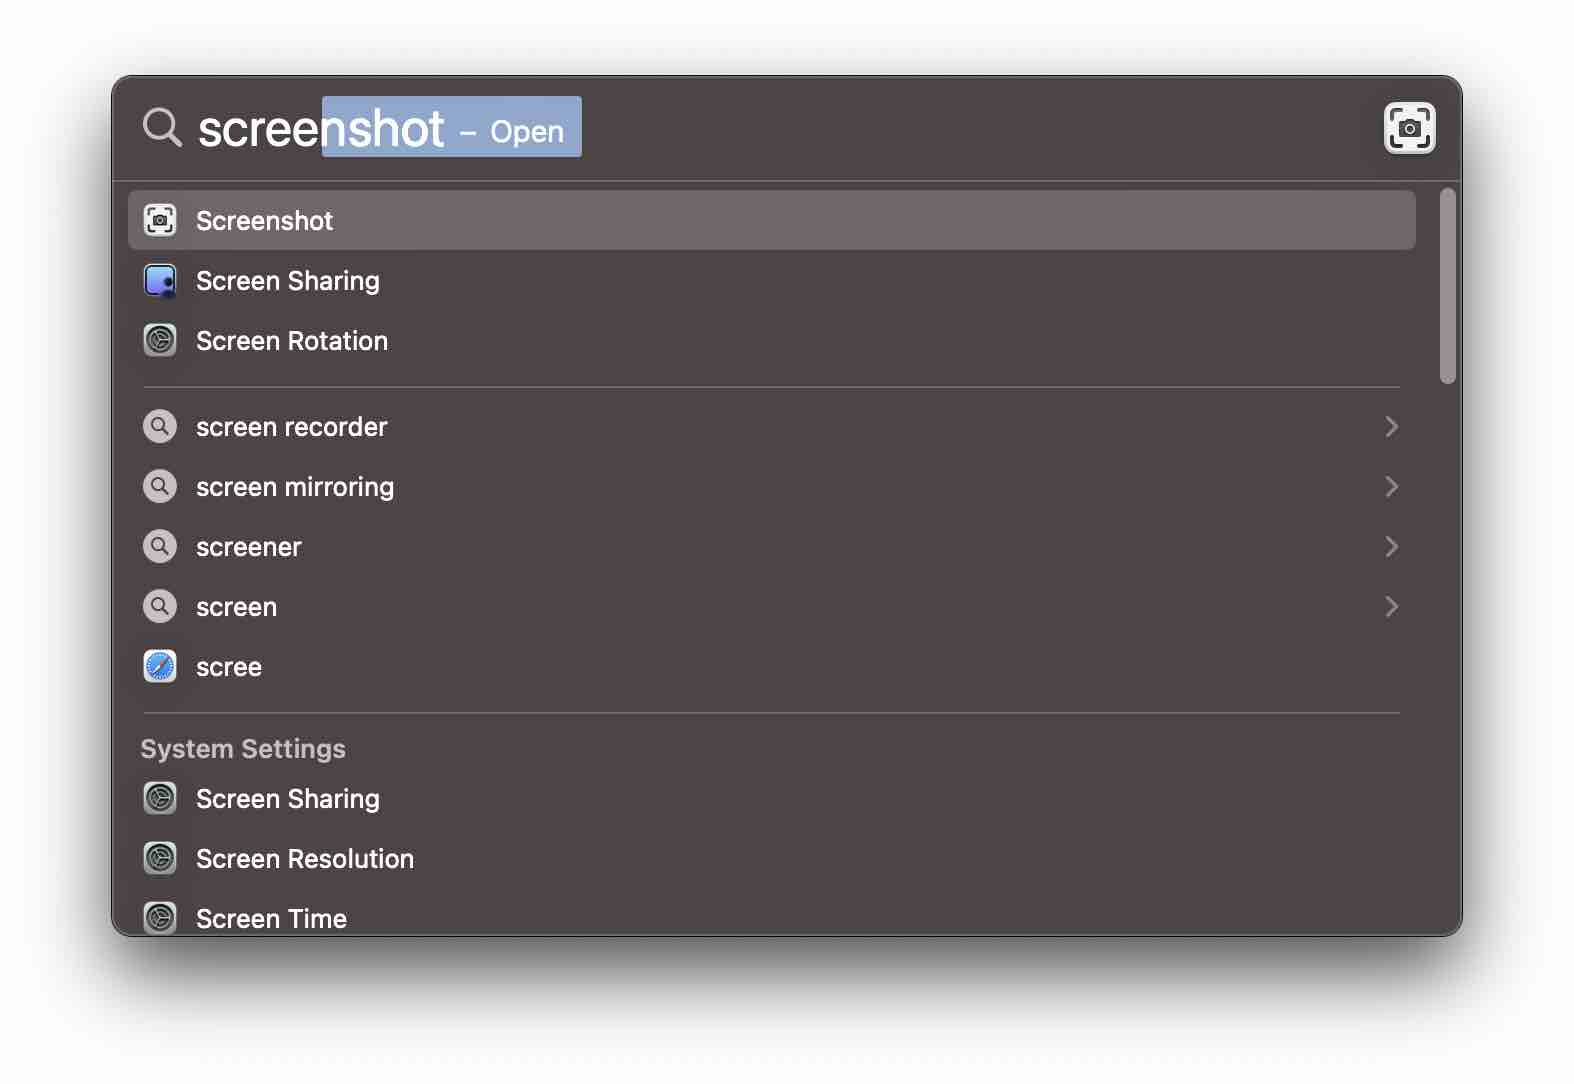 Open Screenshot using macOS Spotlight Search